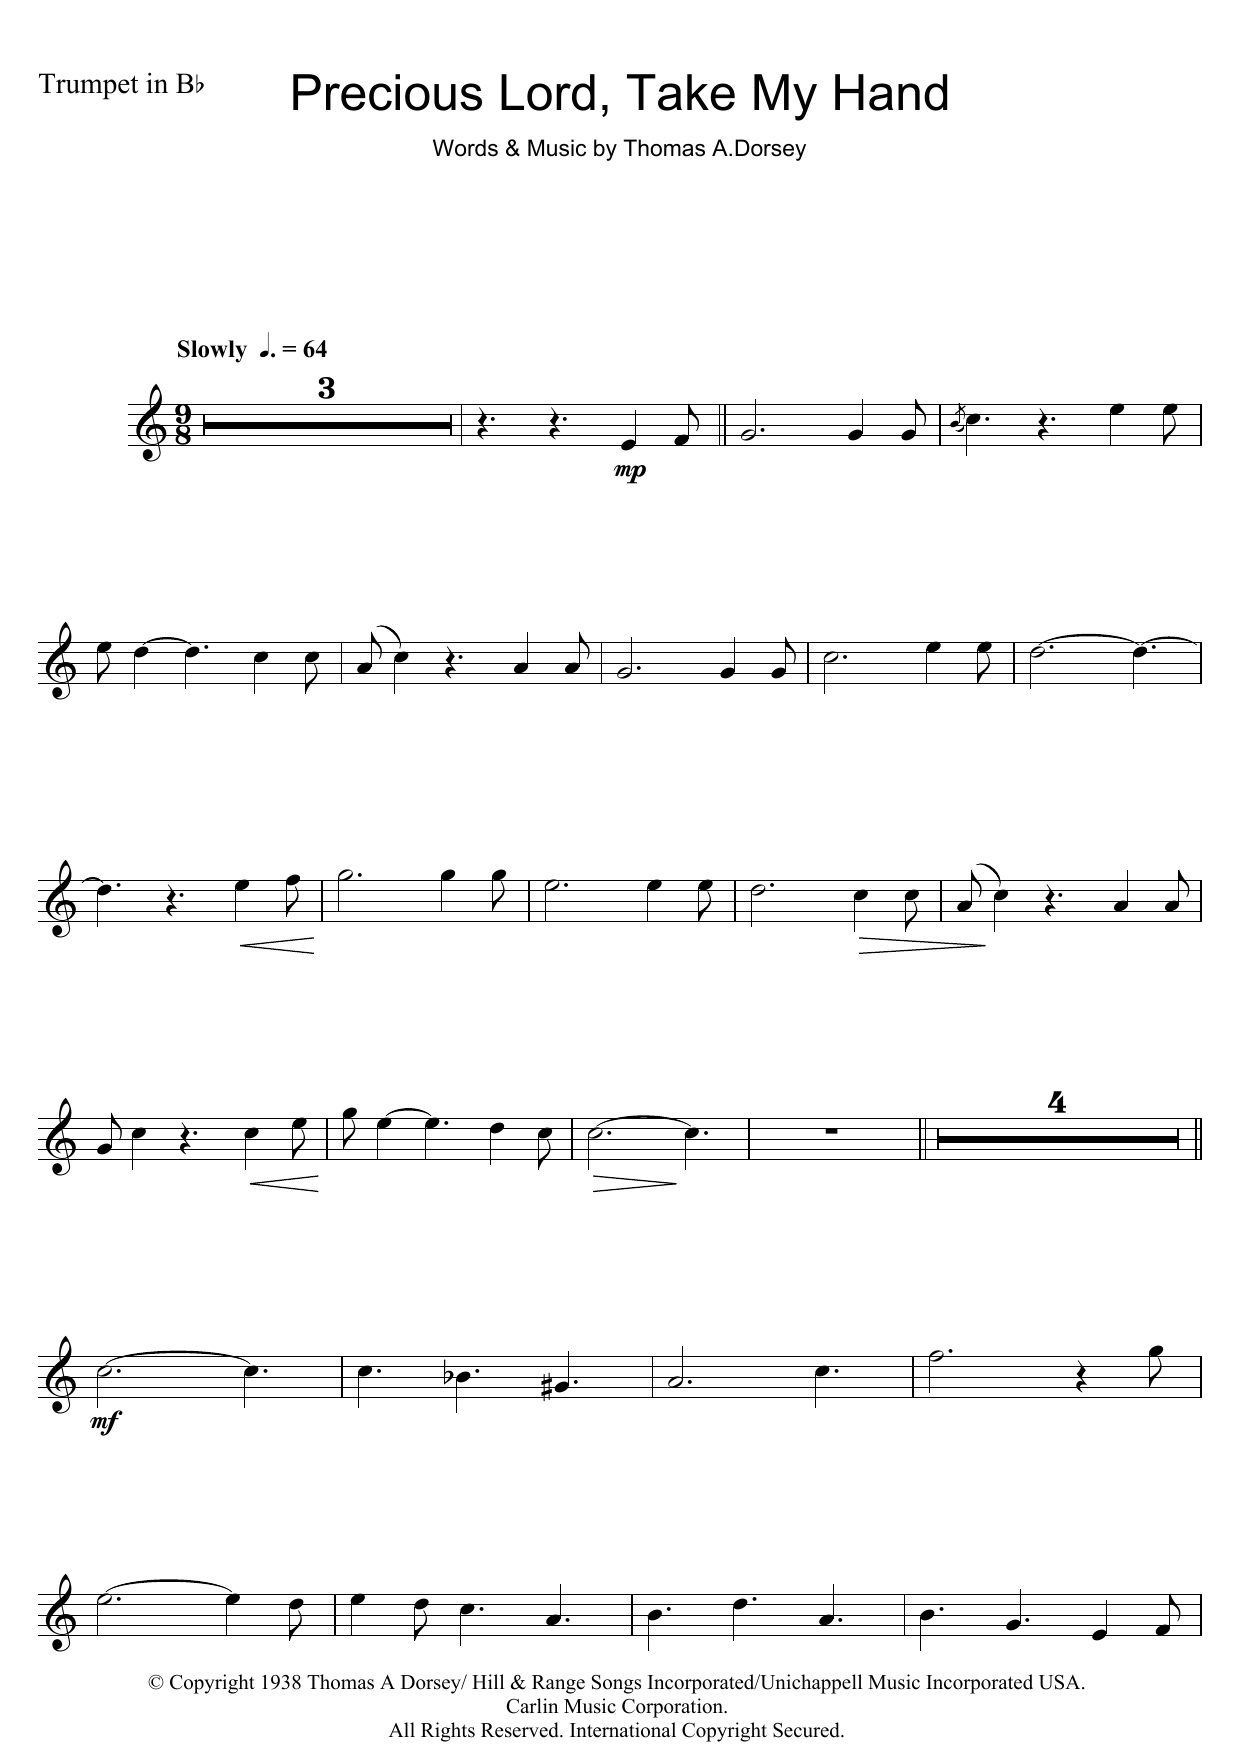 Aretha Franklin Precious Lord, Take My Hand (Take My Hand, Precious Lord) Sheet Music Notes & Chords for Flute - Download or Print PDF